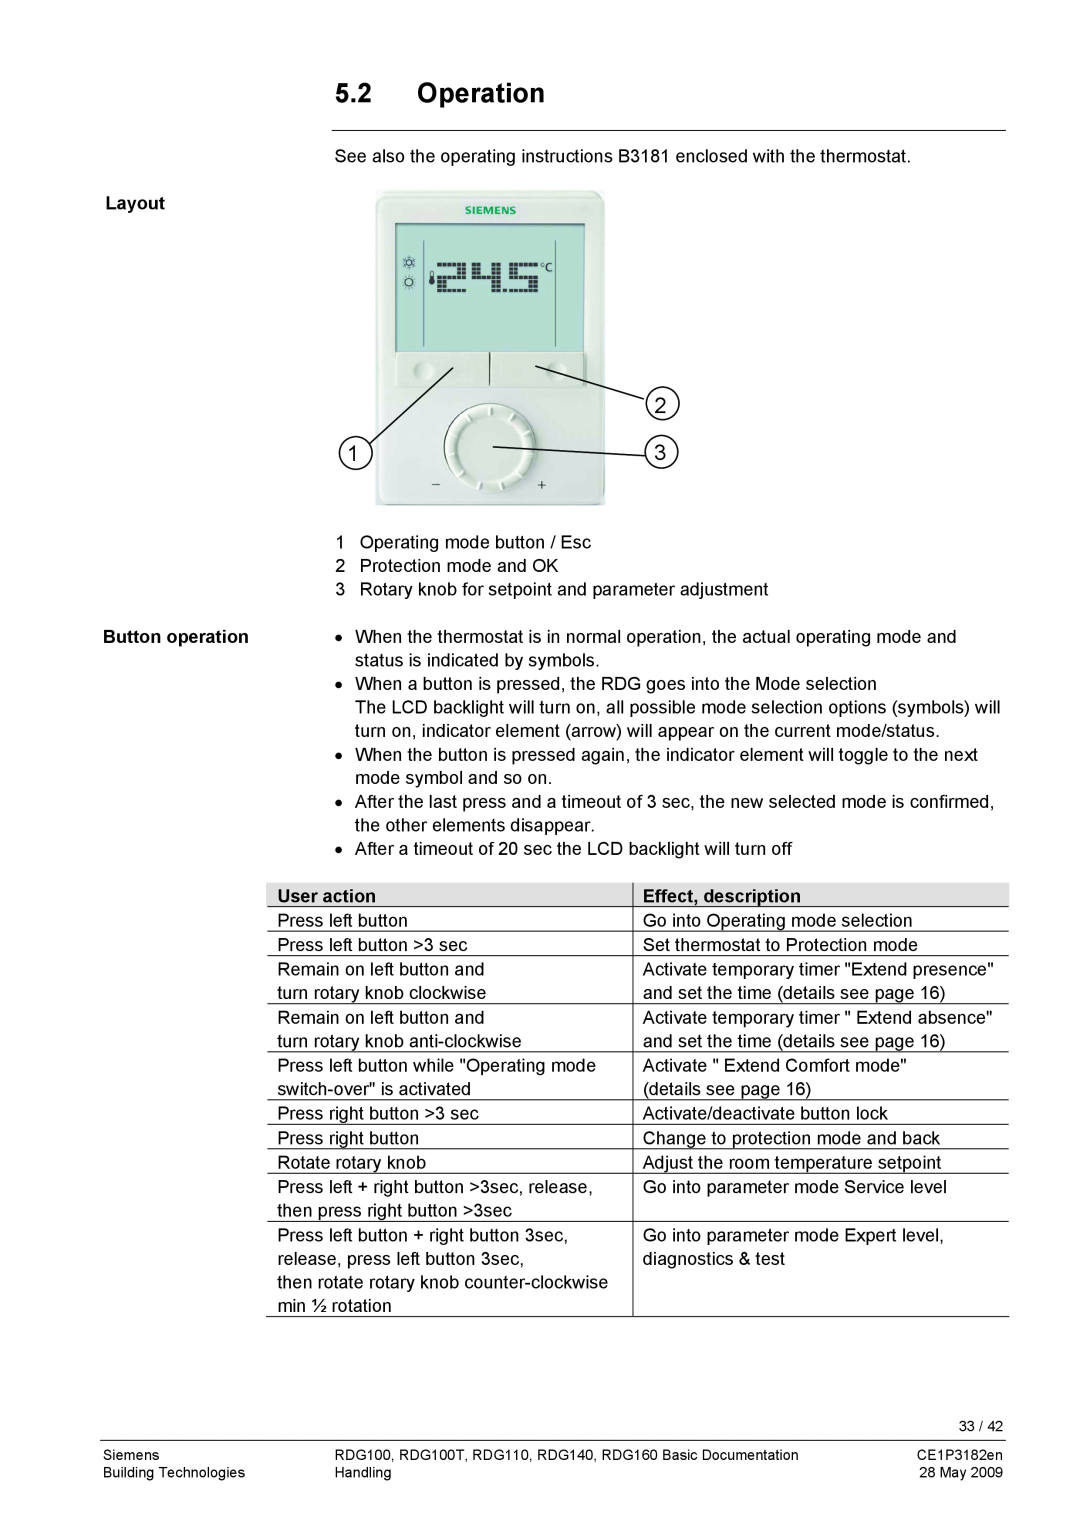 Siemens RDG400 manual 5.2Operation, Layout, Button operation, User action, Effect, description 